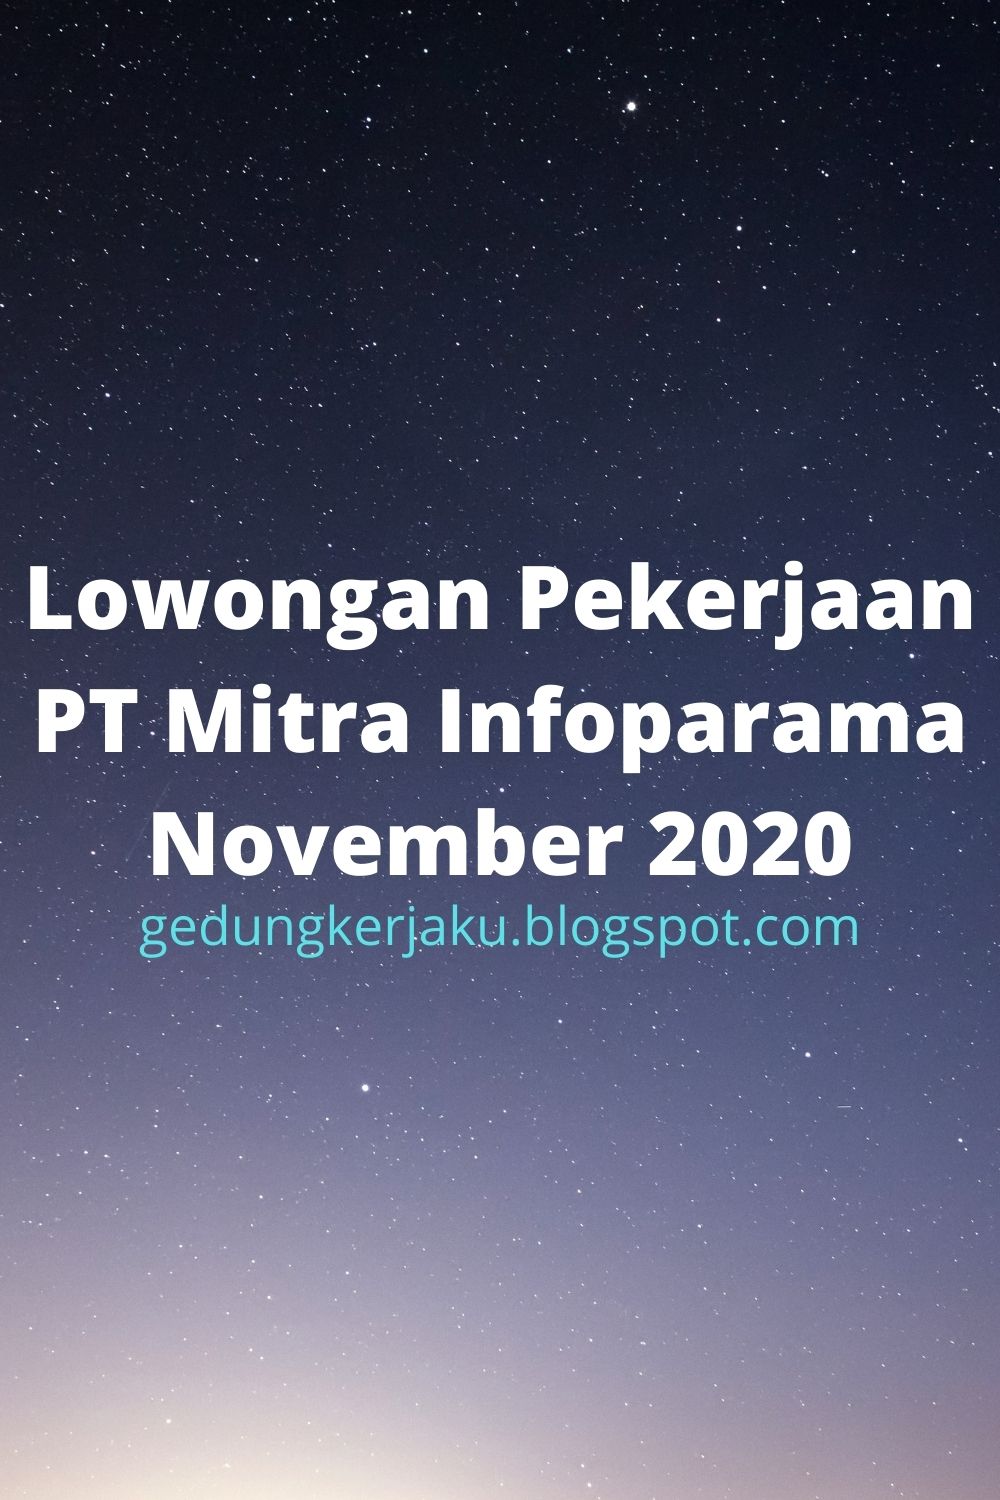 Lowongan Pekerjaan PT Mitra Infoparama November 2020